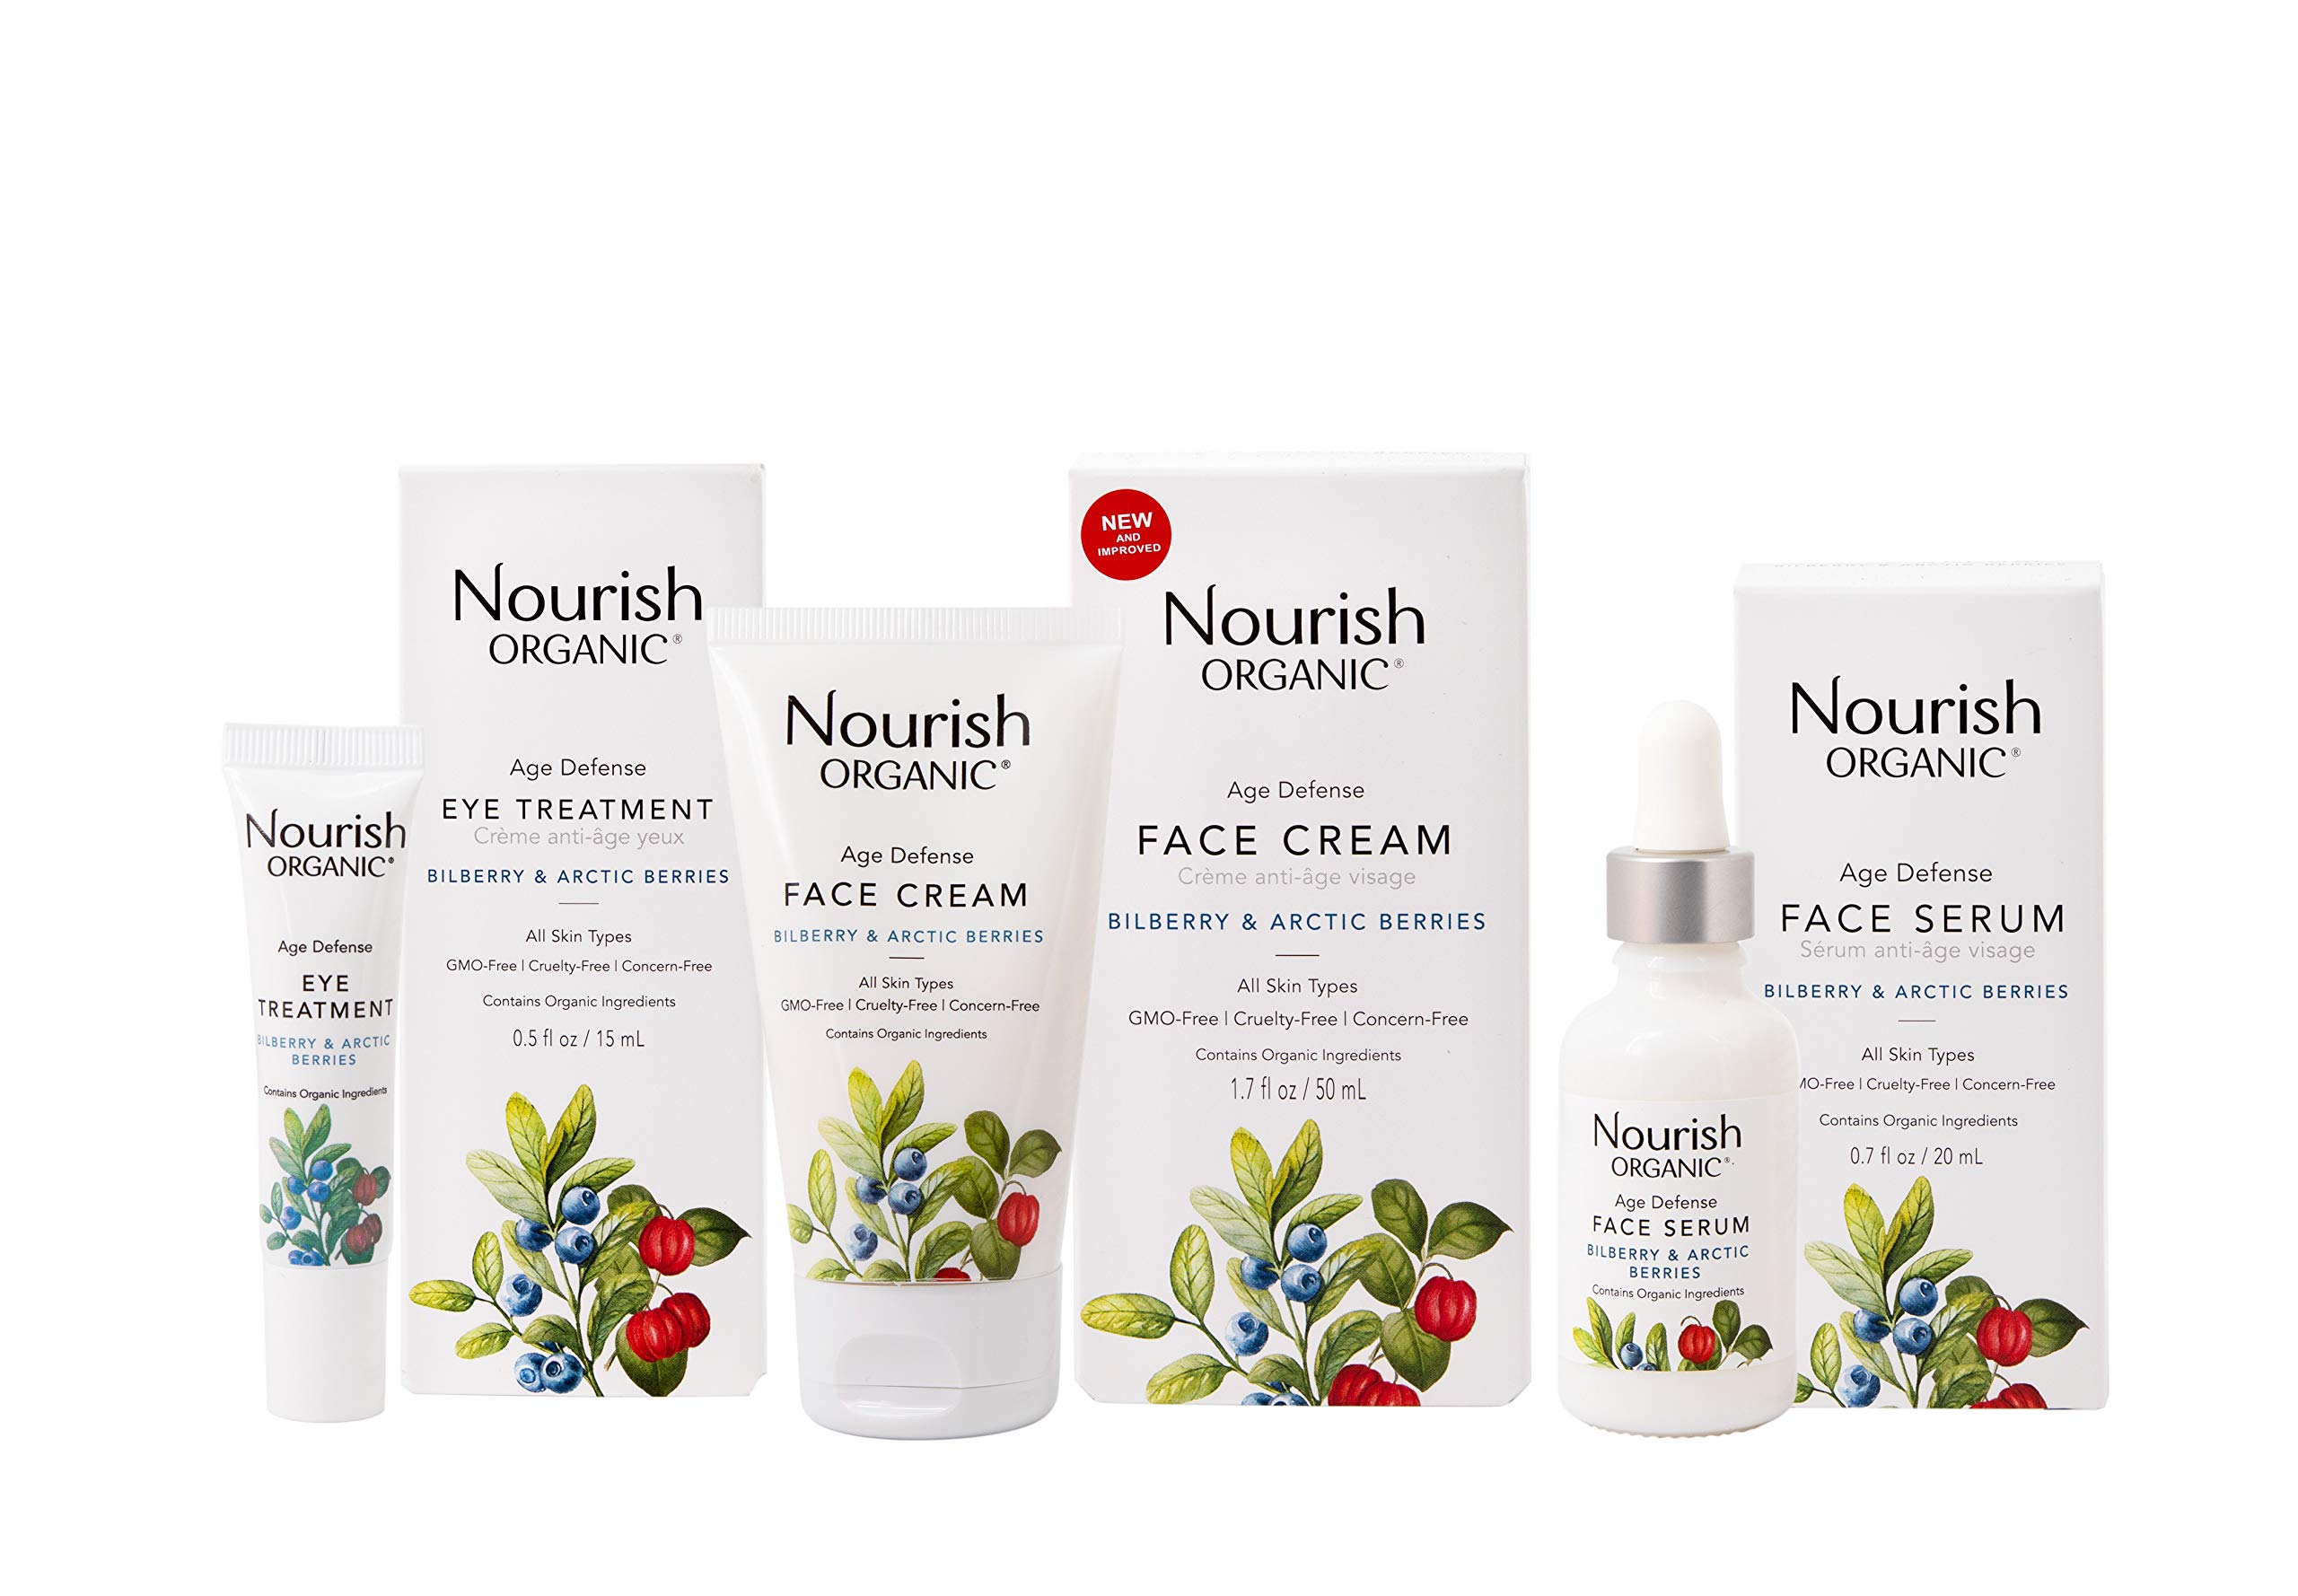 Nourish Organic | Age Defense Face Serum | GMO-Free, Cruelty Free, Fragrance Free (0.7oz)